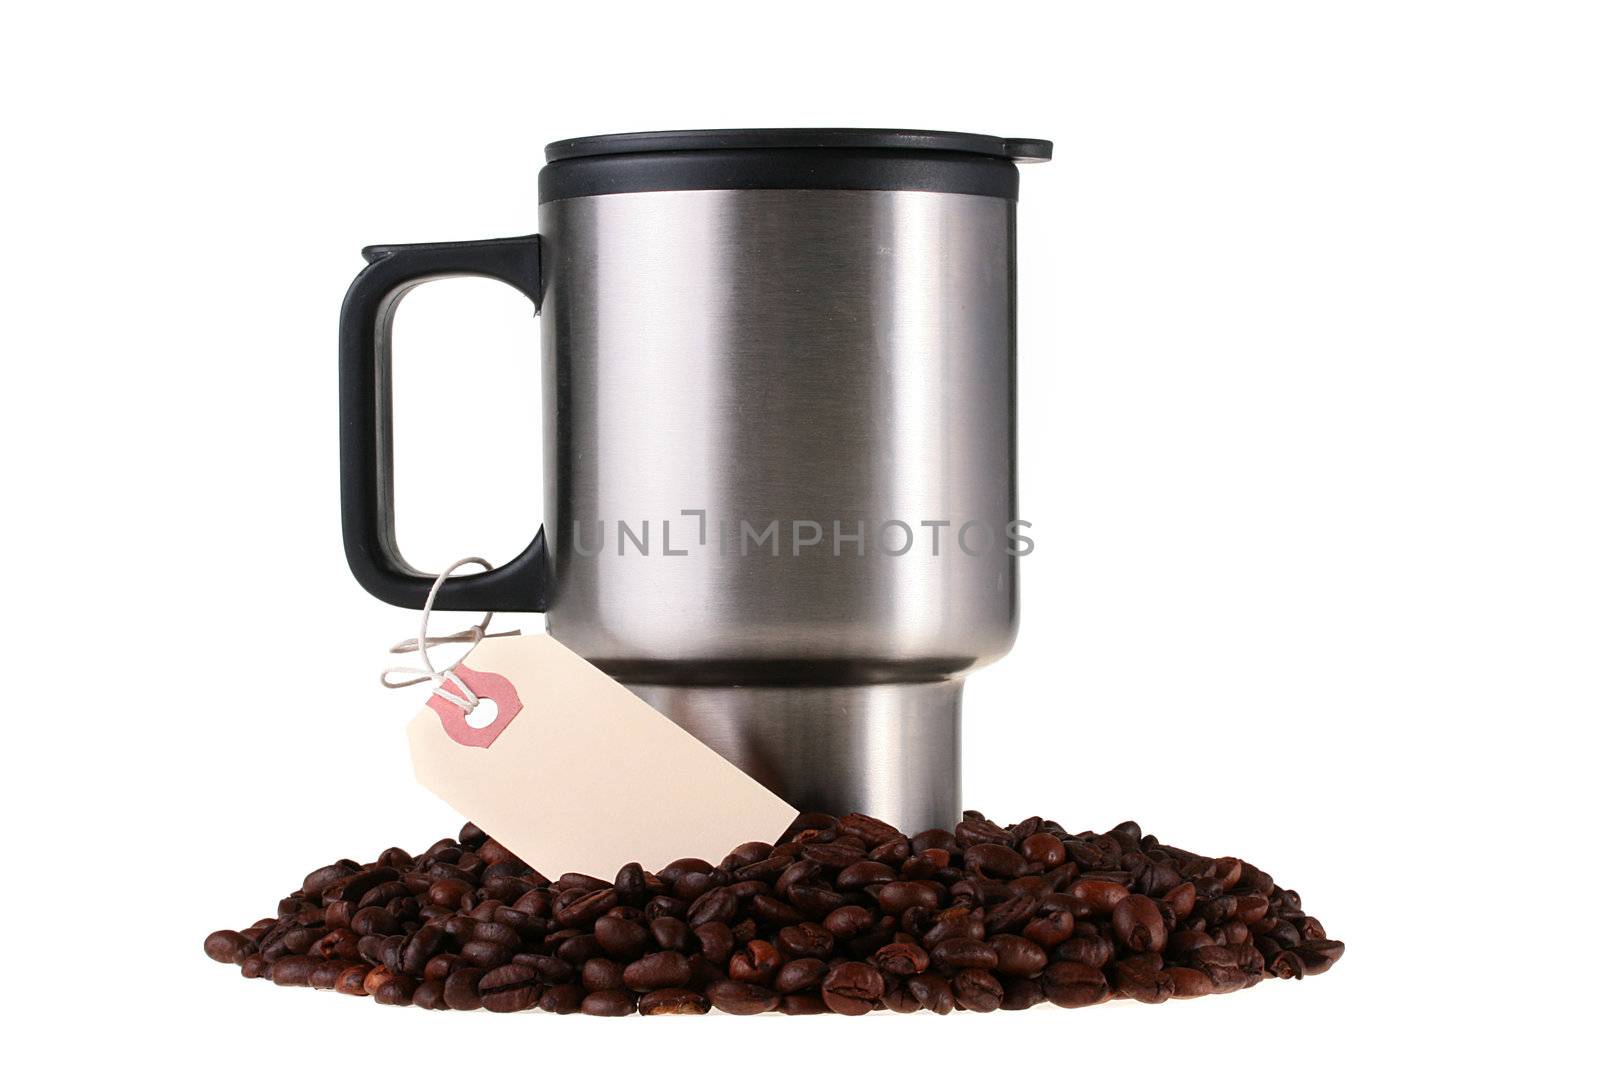 Mug for coffee among coffee grains with the label adhered to the handle.